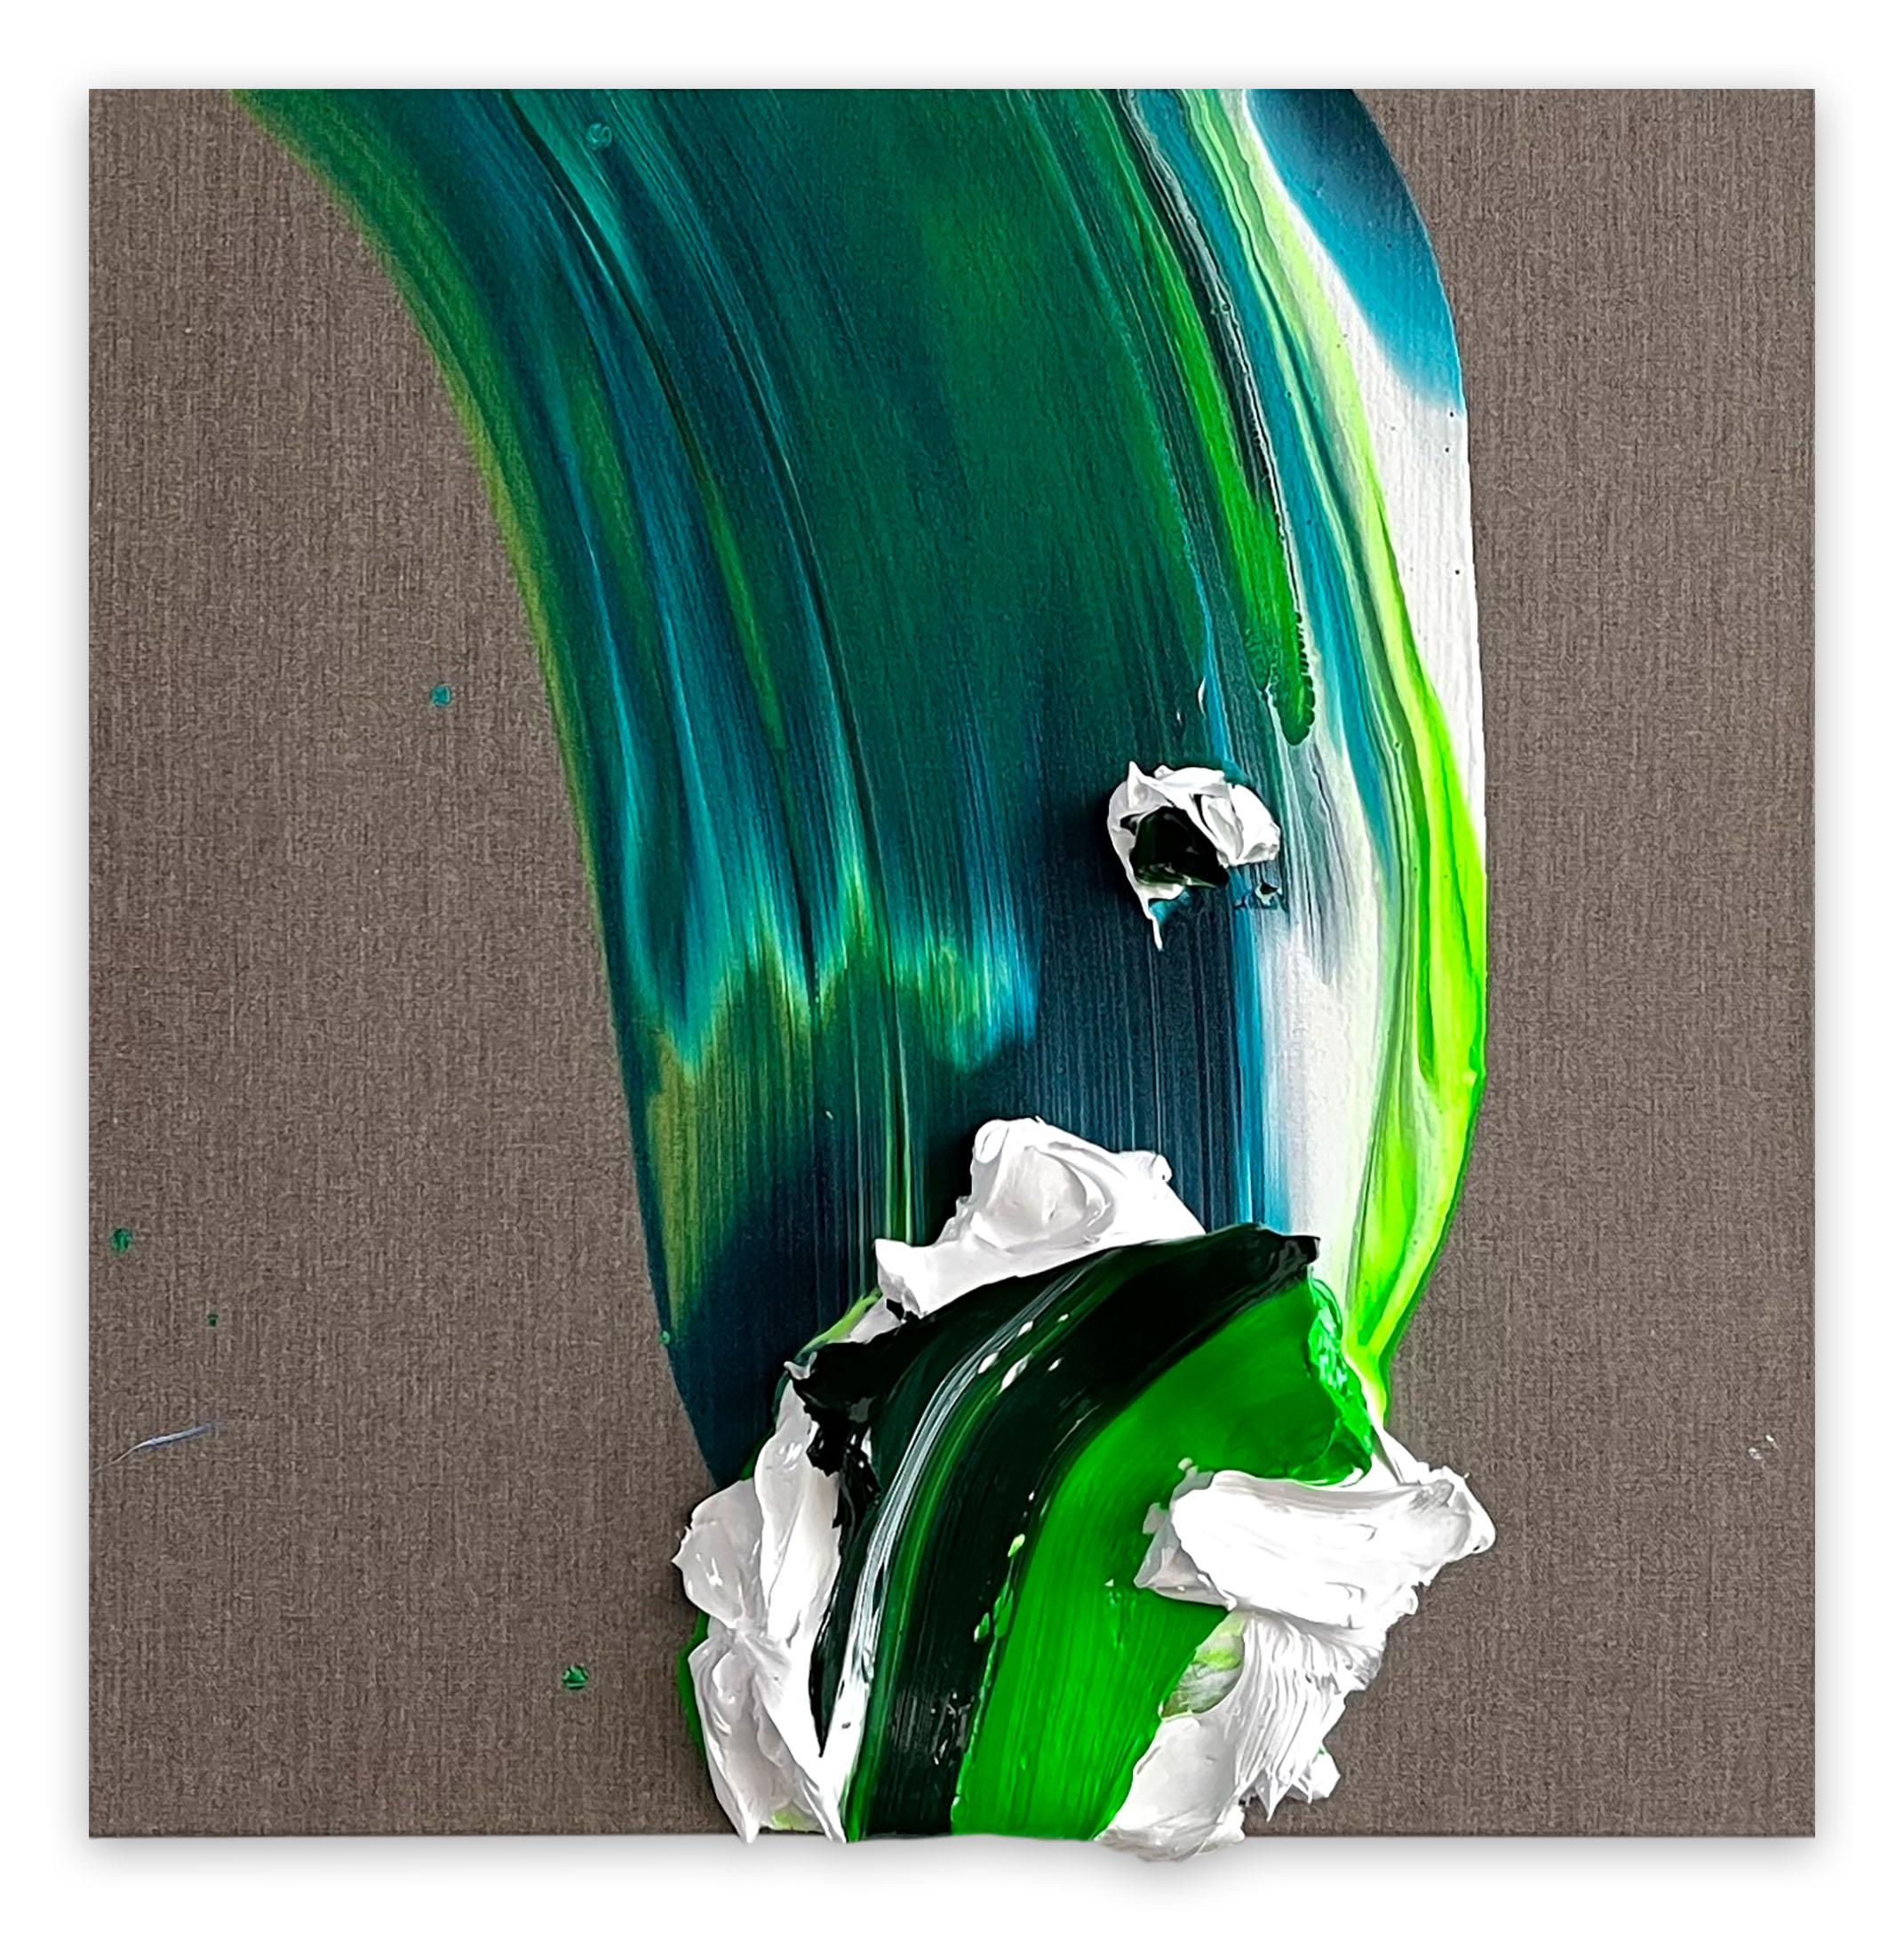 Abstract Painting Nikolaos Schizas - Petite vague verte (peinture abstraite)